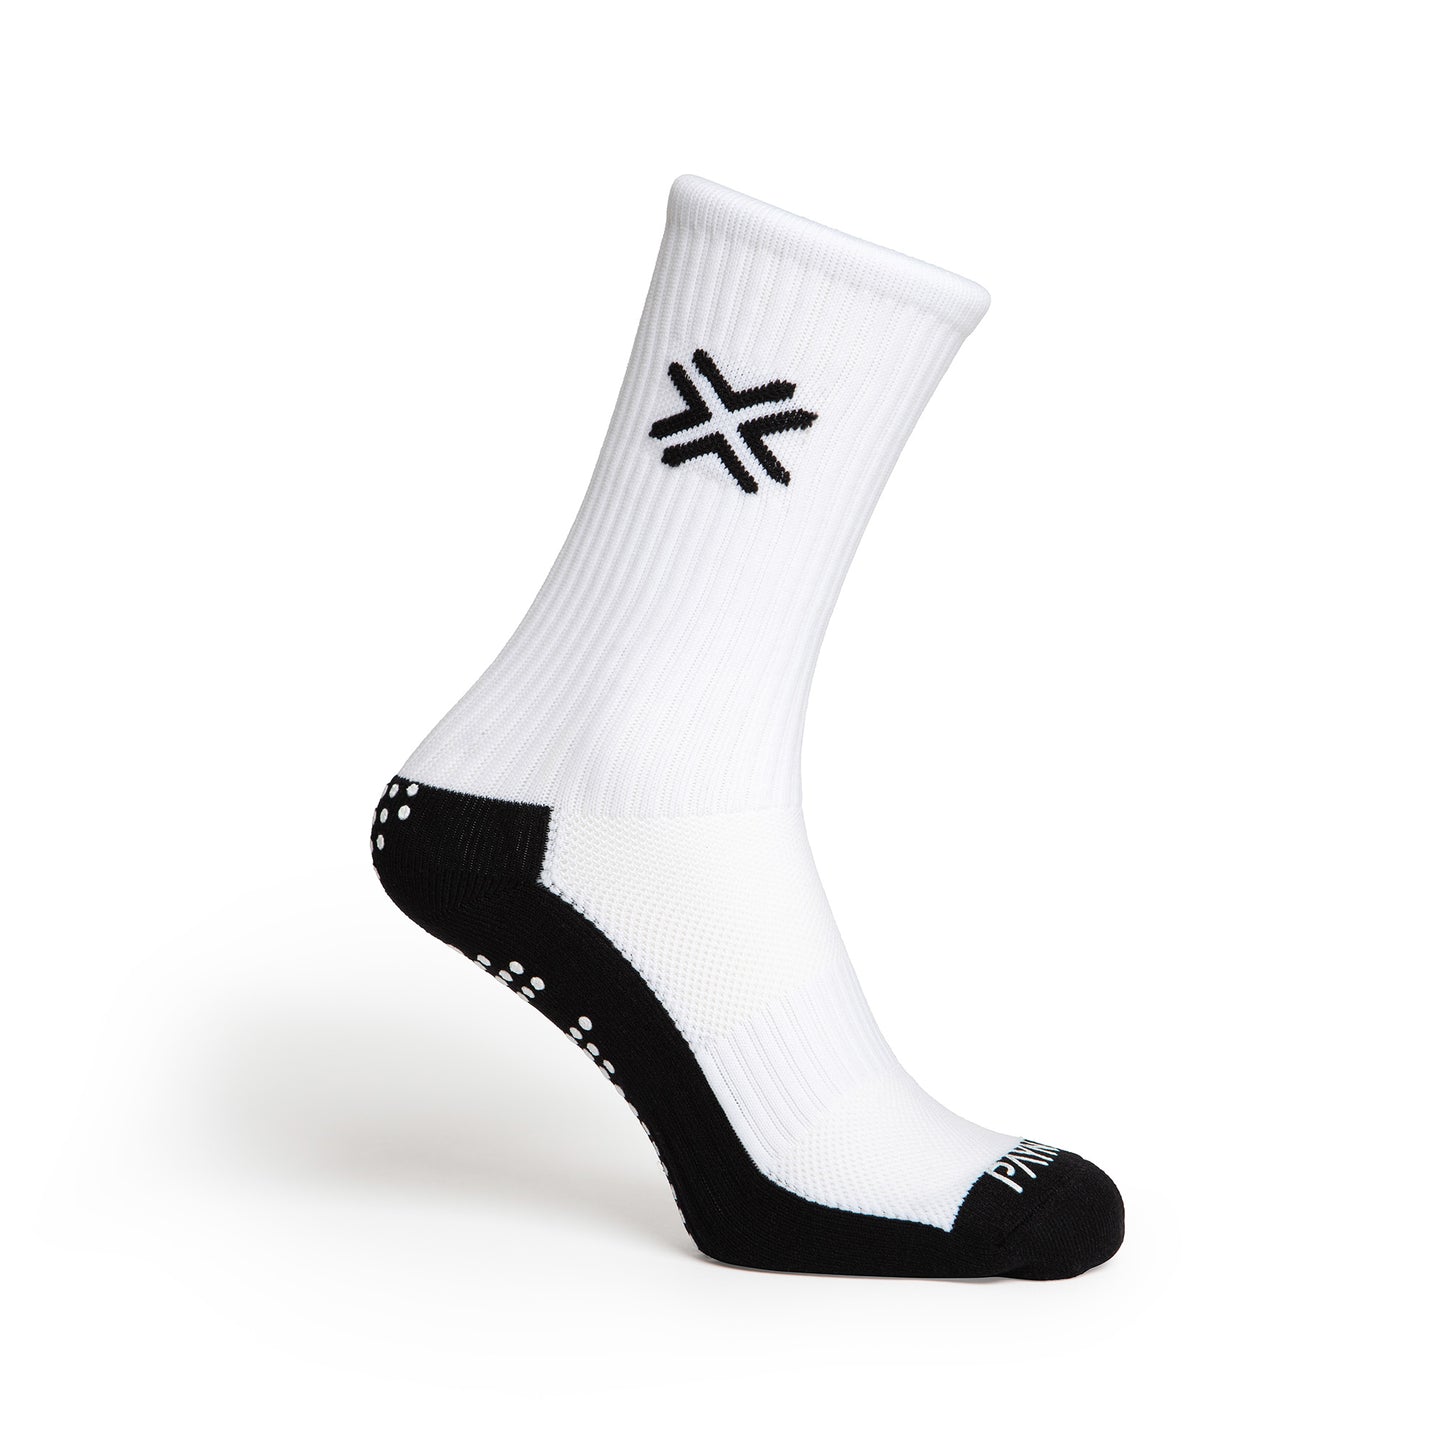 PAYNTR Performance Grip Socks - White